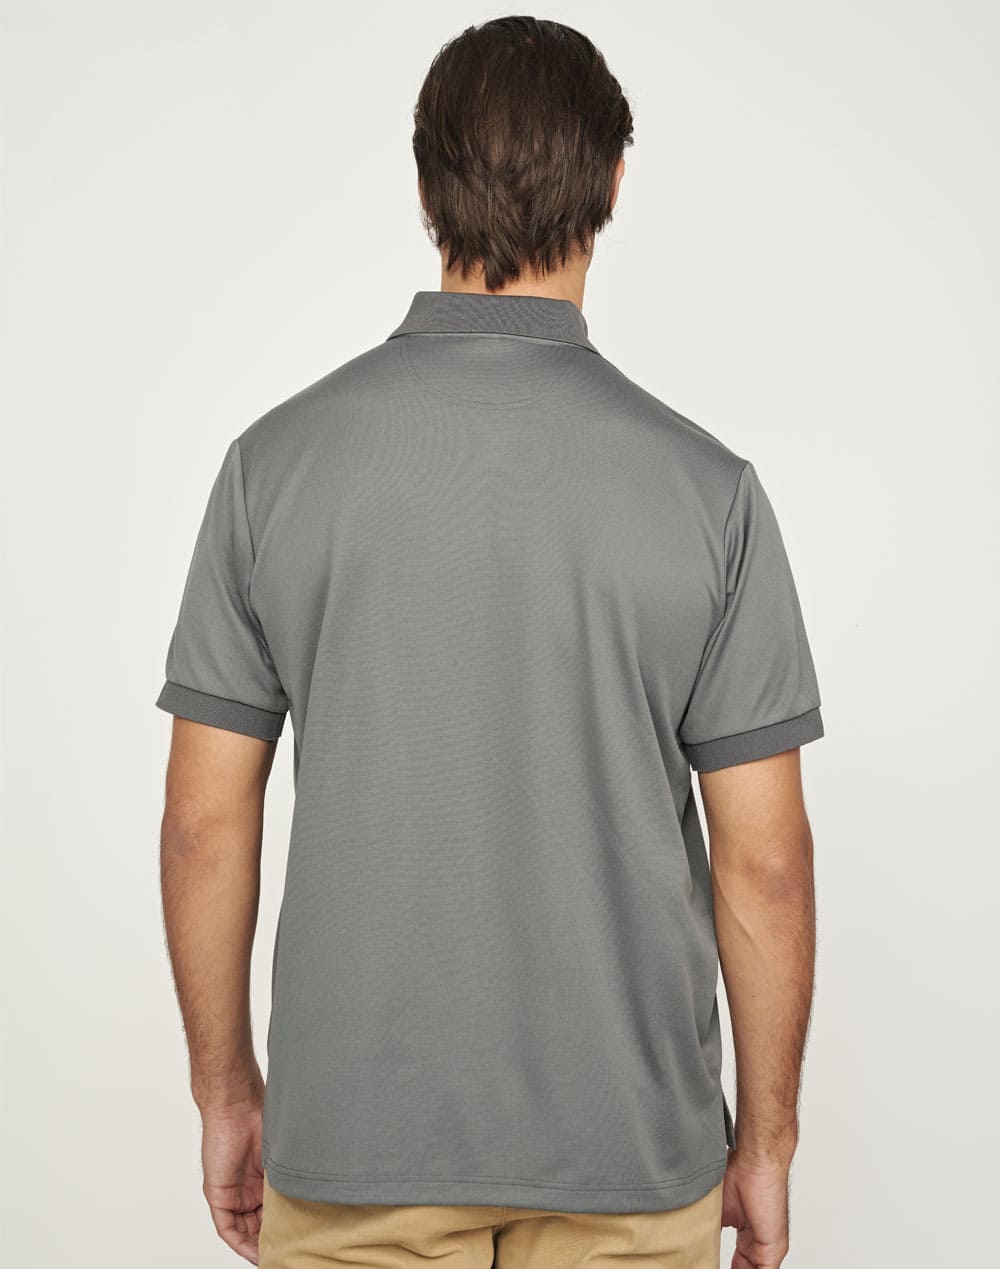 Custom Men's Corporate Branded Polo Shirts Online Perth Australia